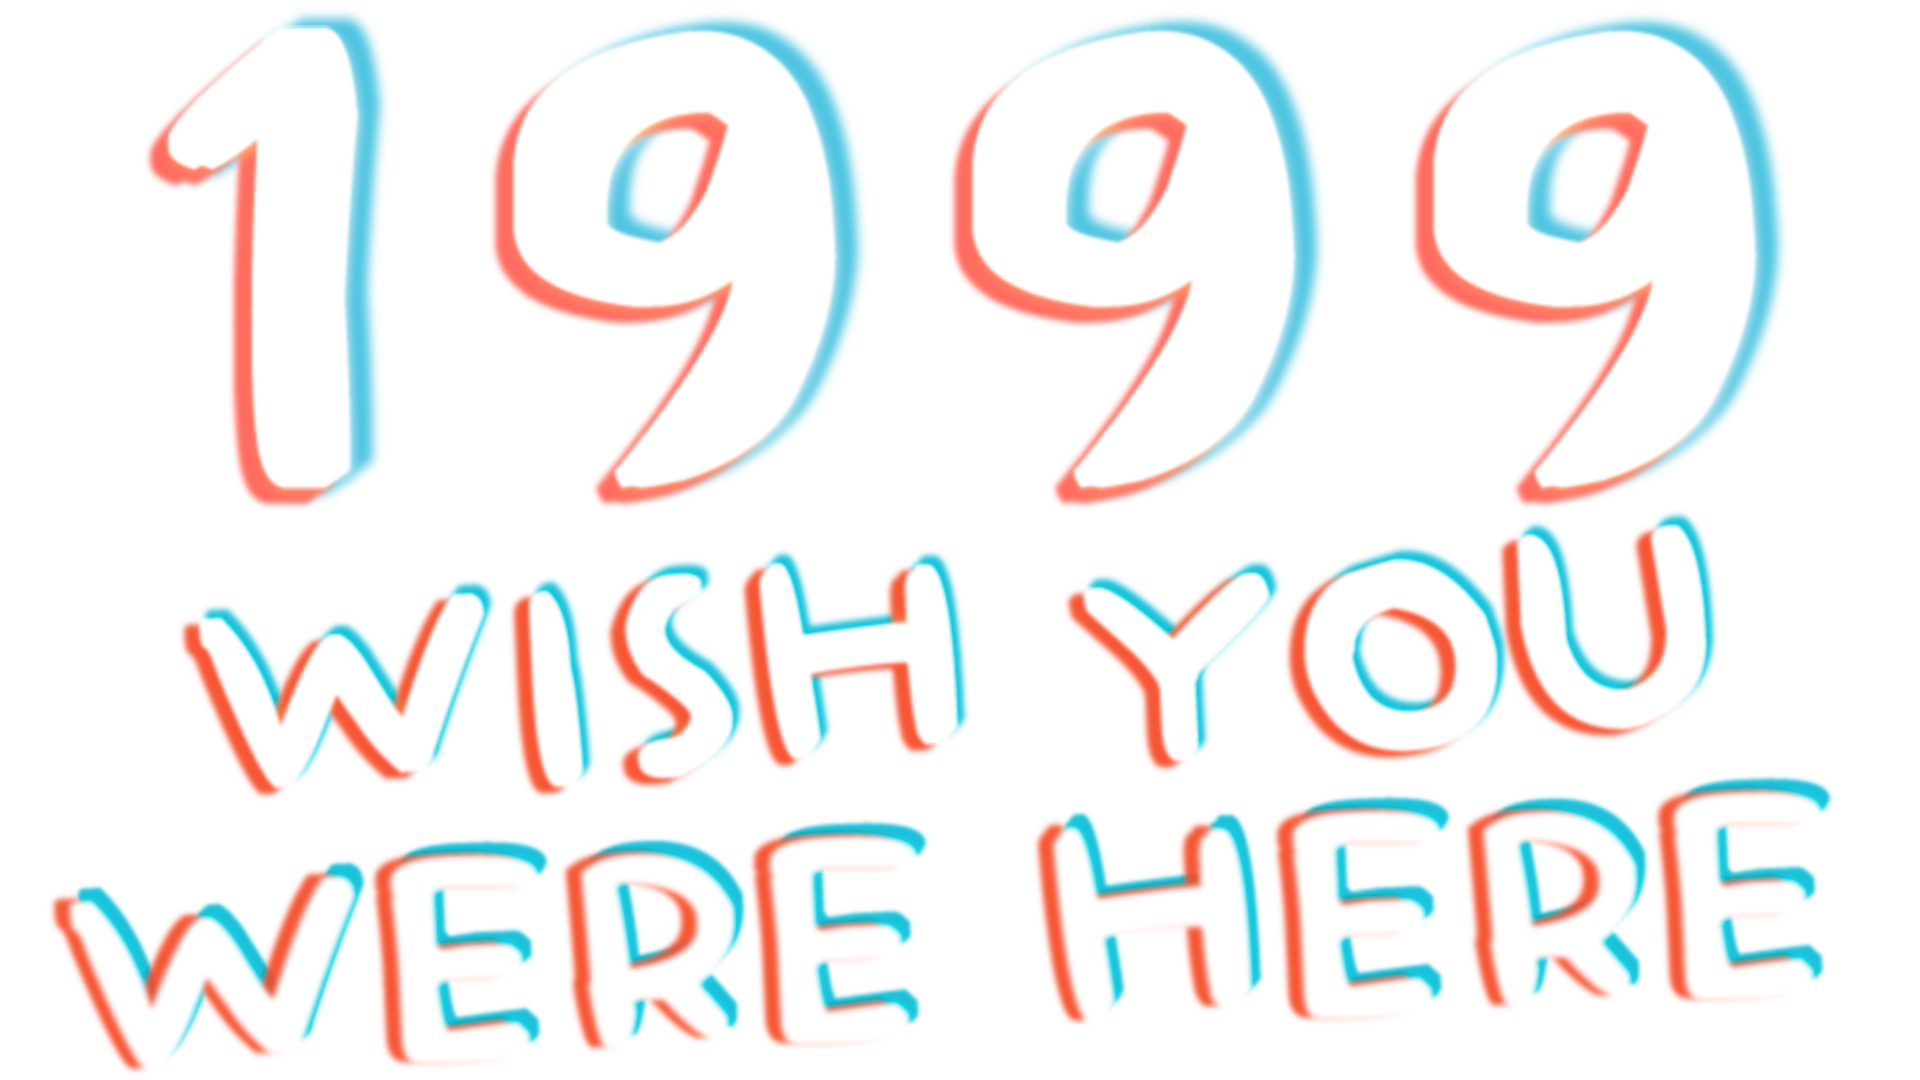 1999 : Wish You Were Here